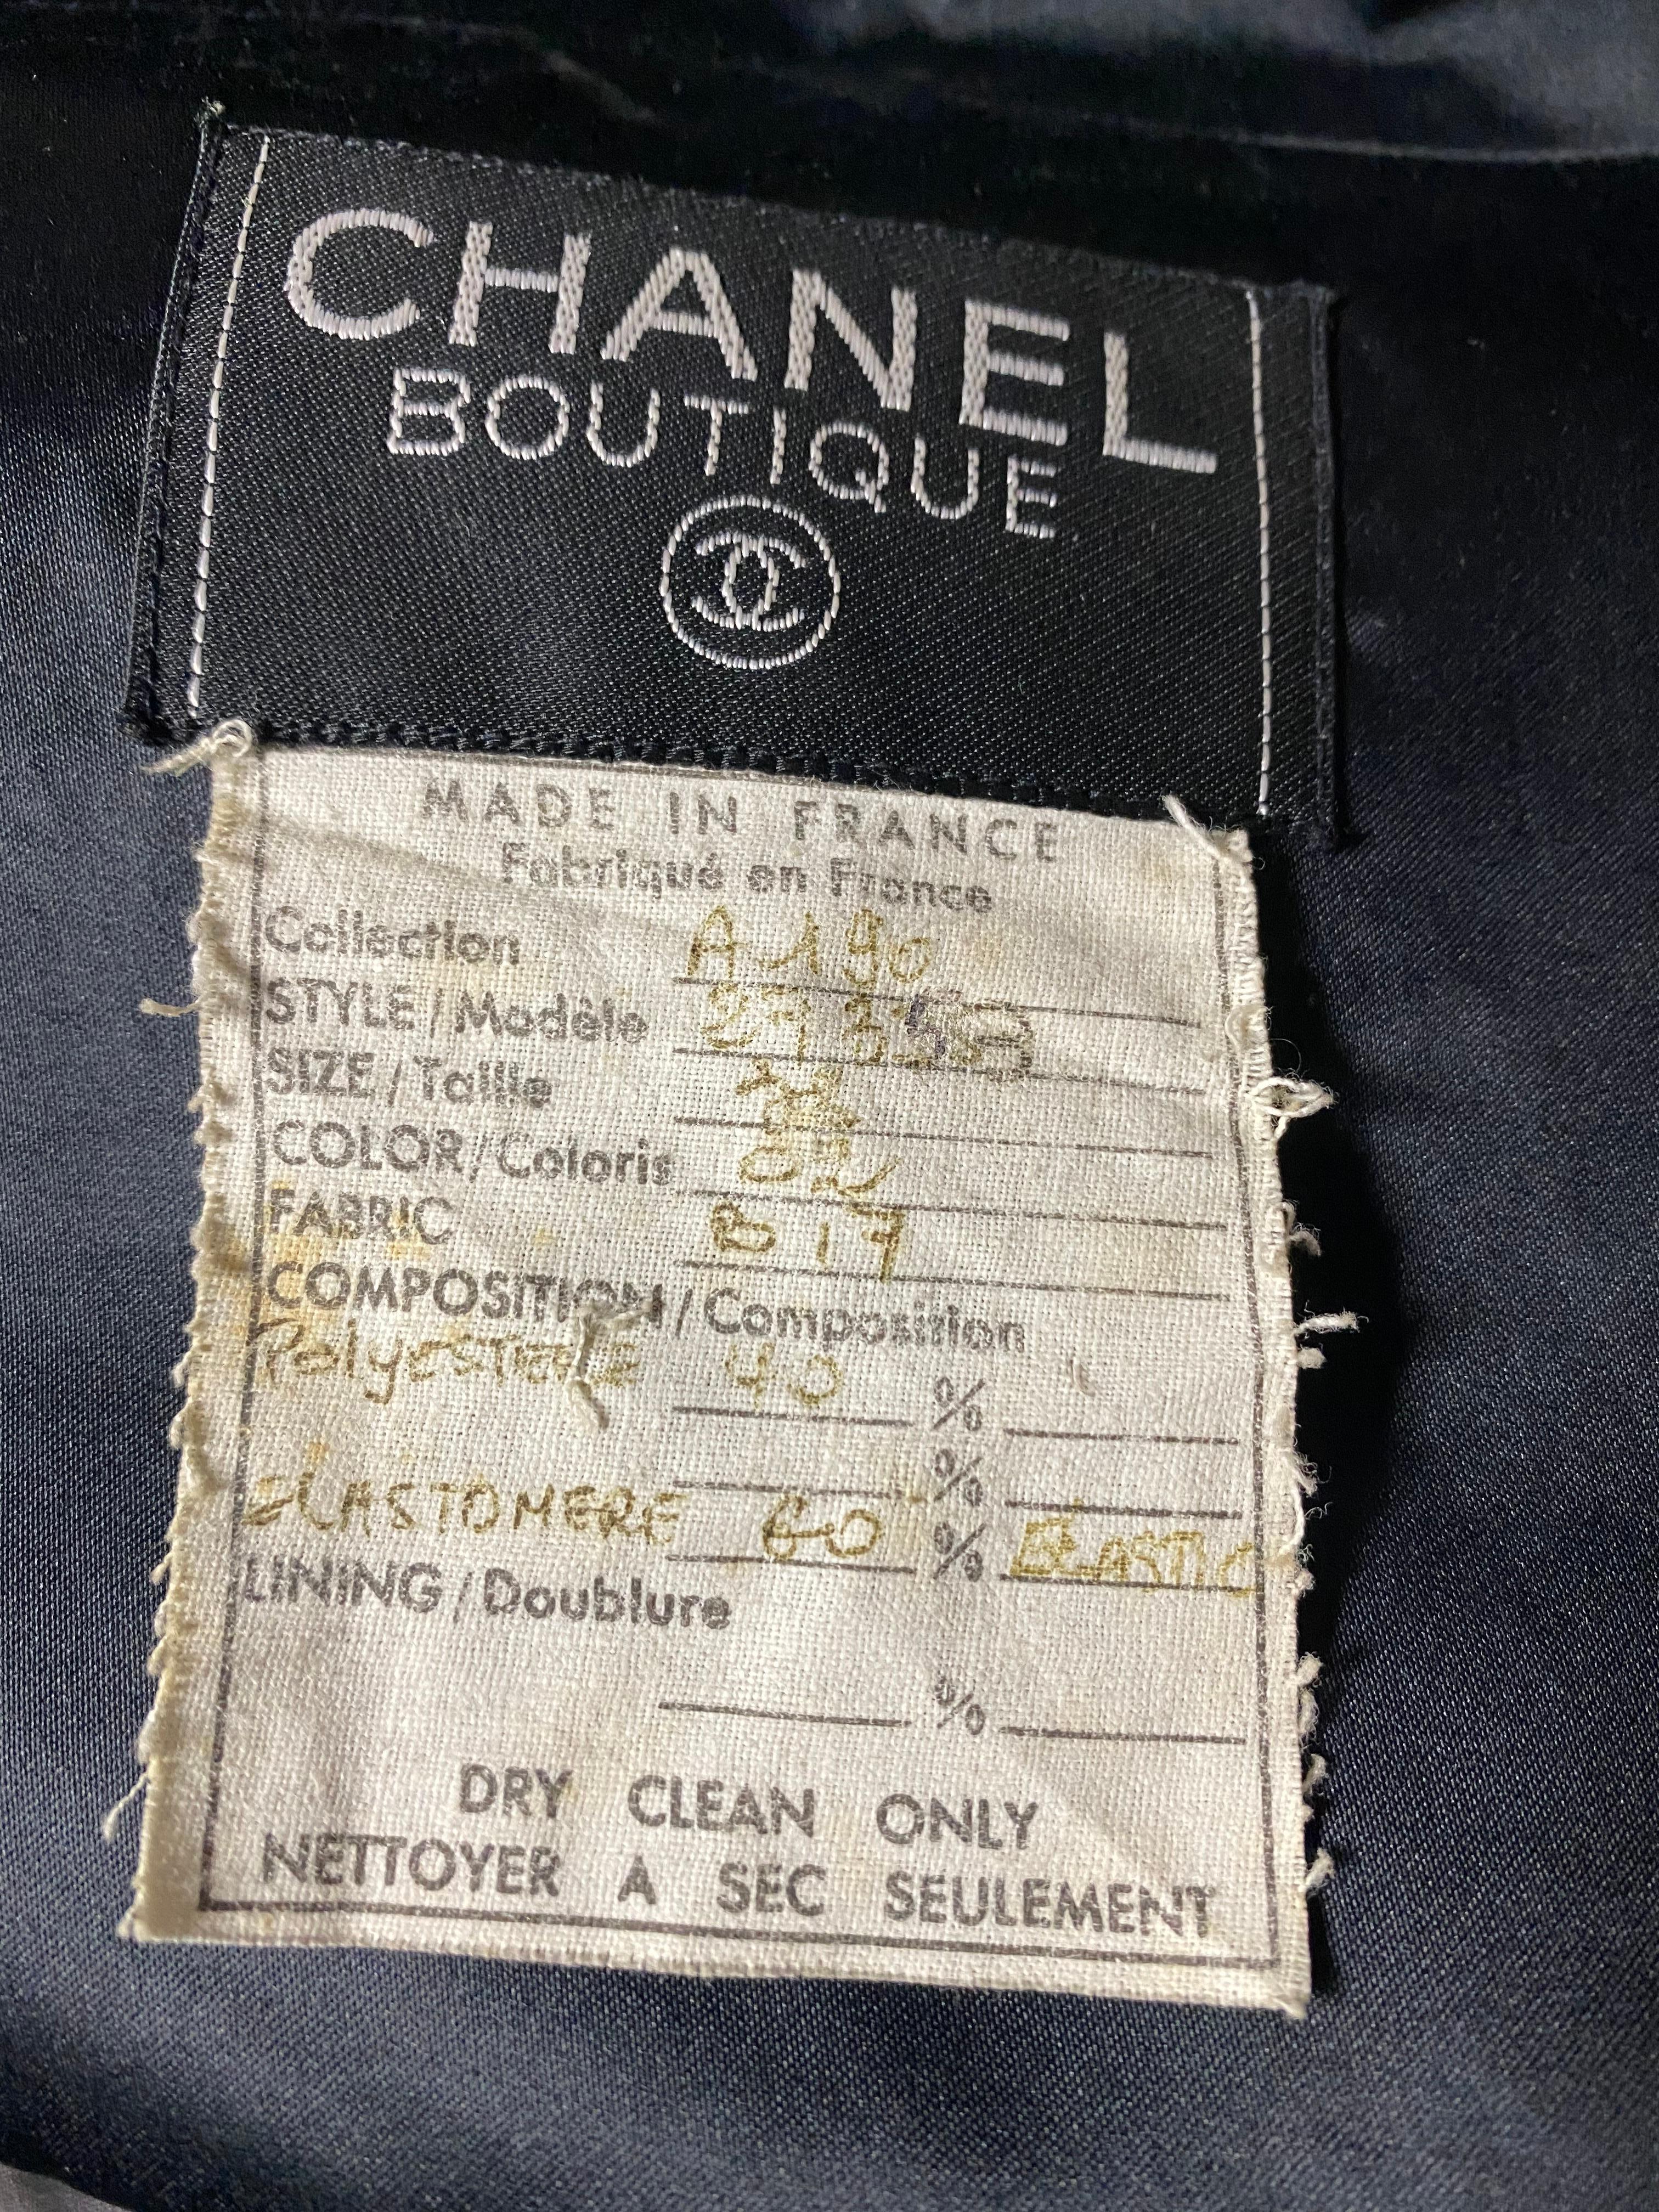 Vintage Chanel Boutique Navy Rain Coat Jacket For Sale 2